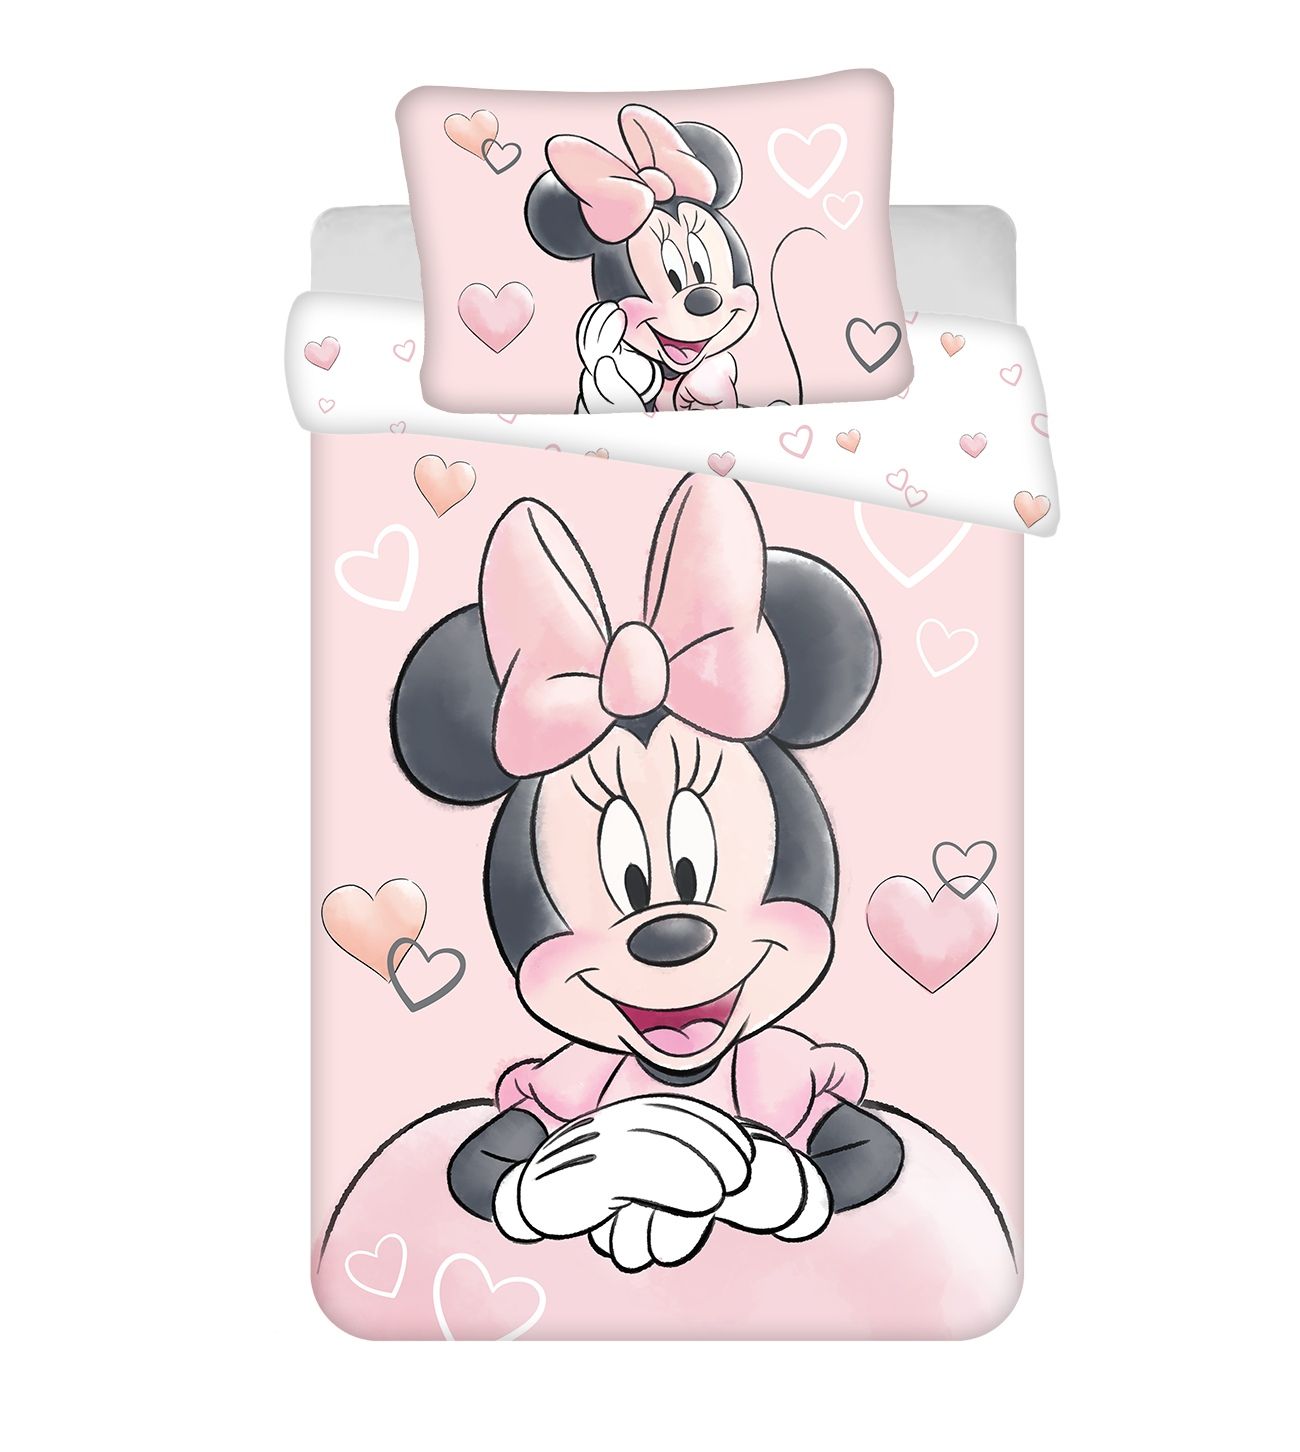 Disney obliečky do postieľky Minnie Powder pink baby Jerry Fabrics